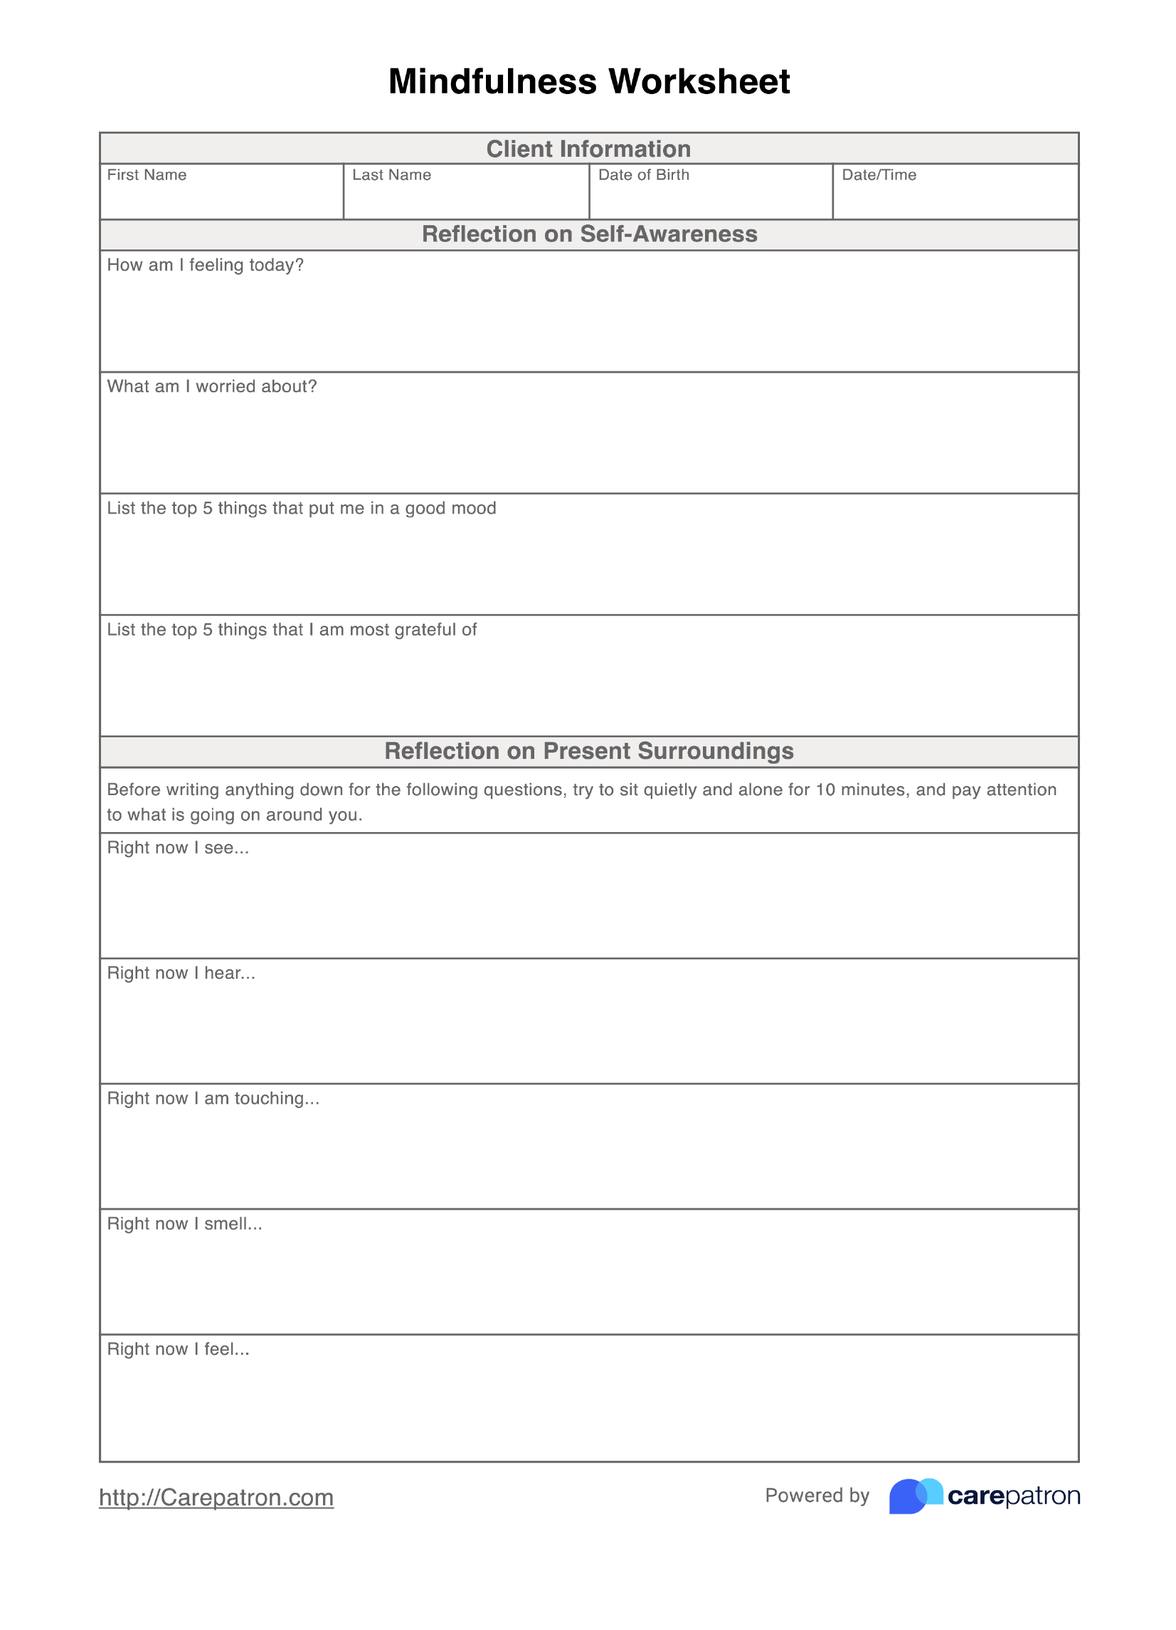 Mindfulness Worksheets PDF Example